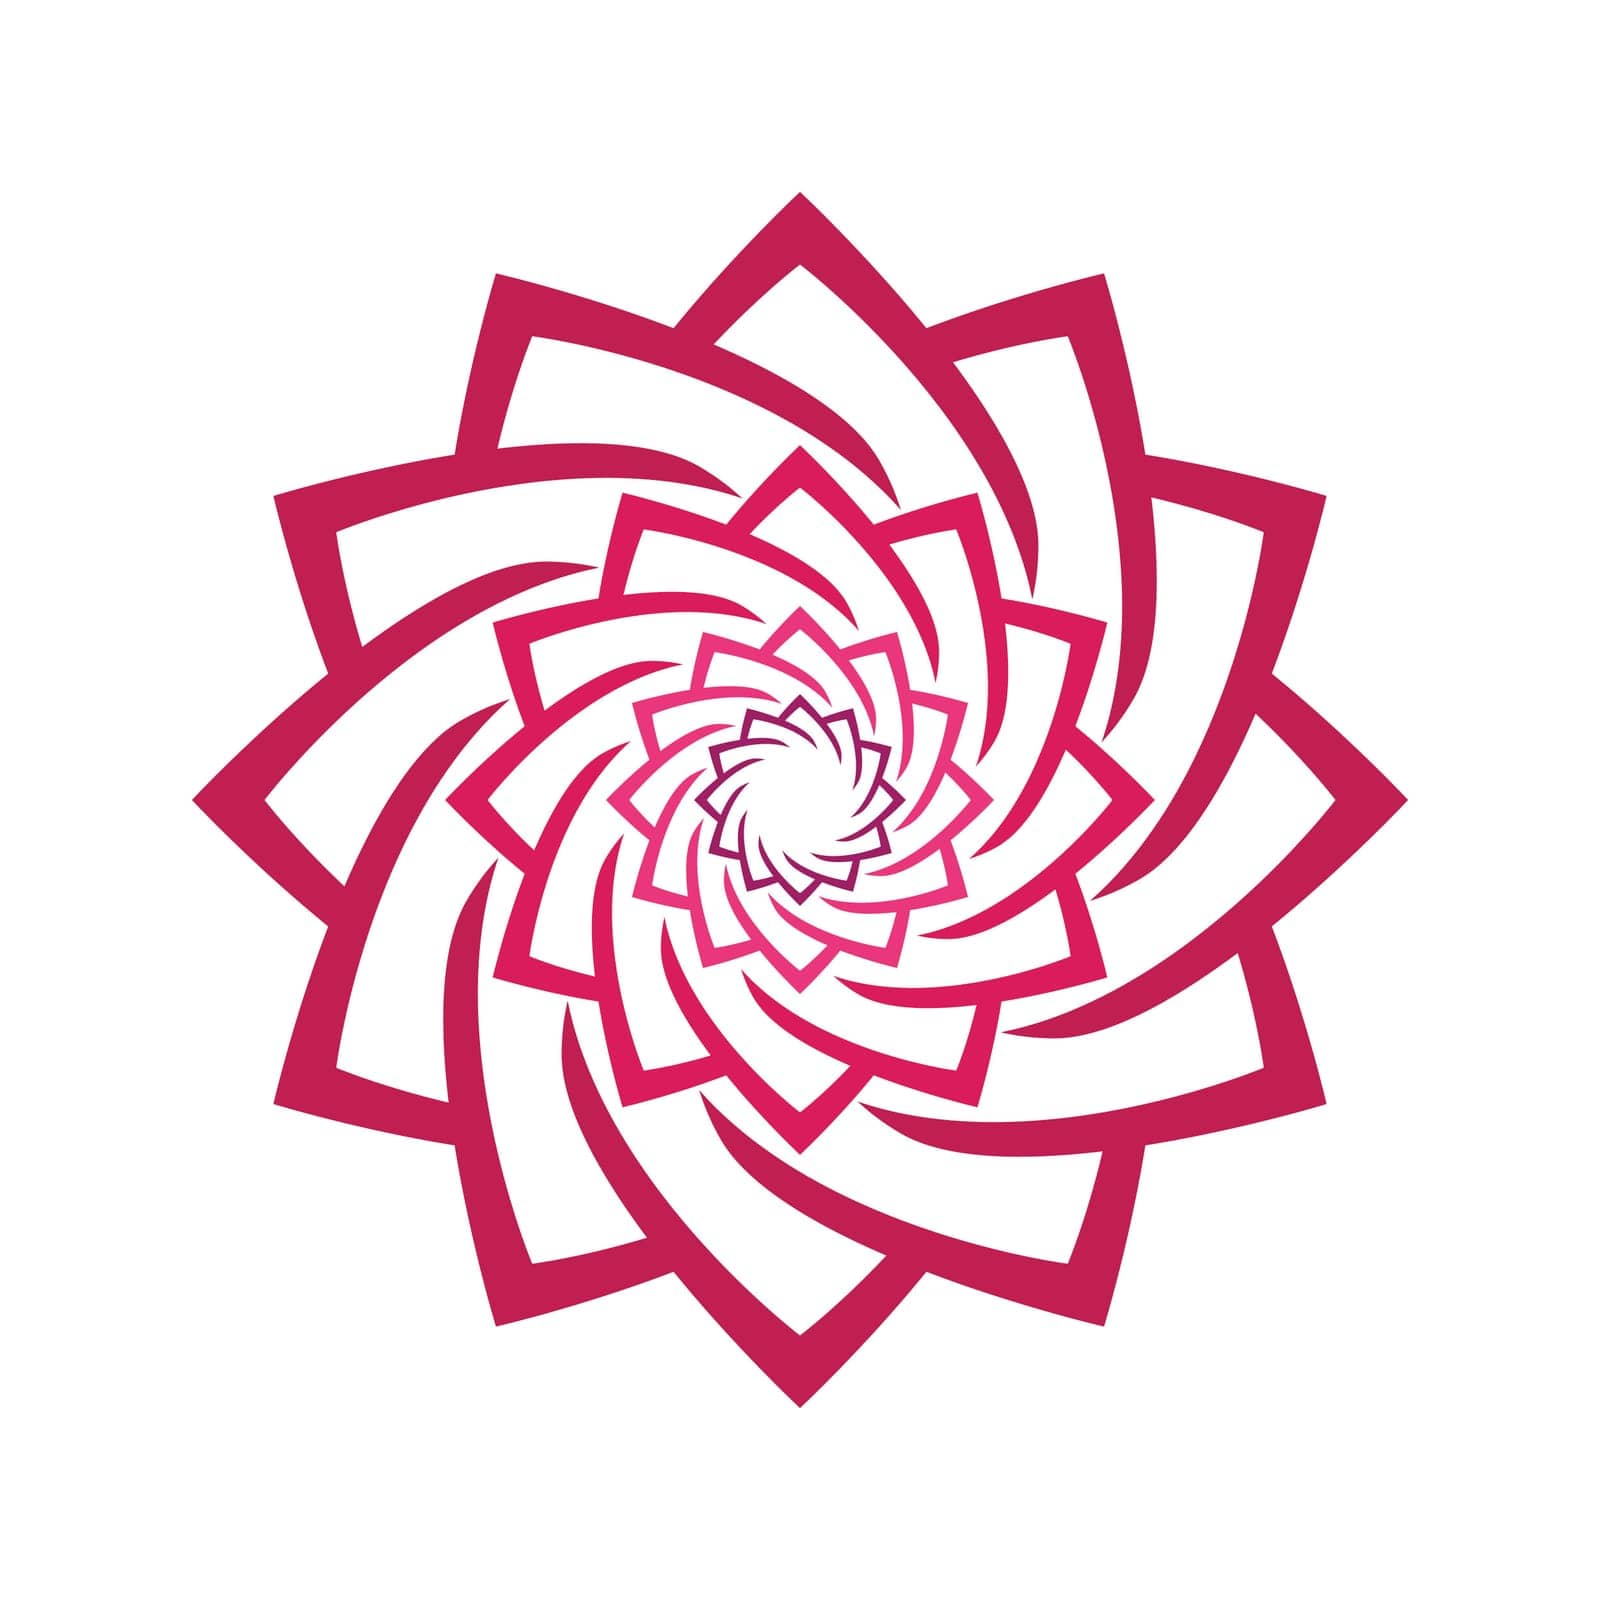 Beautiful flower logo by rnking